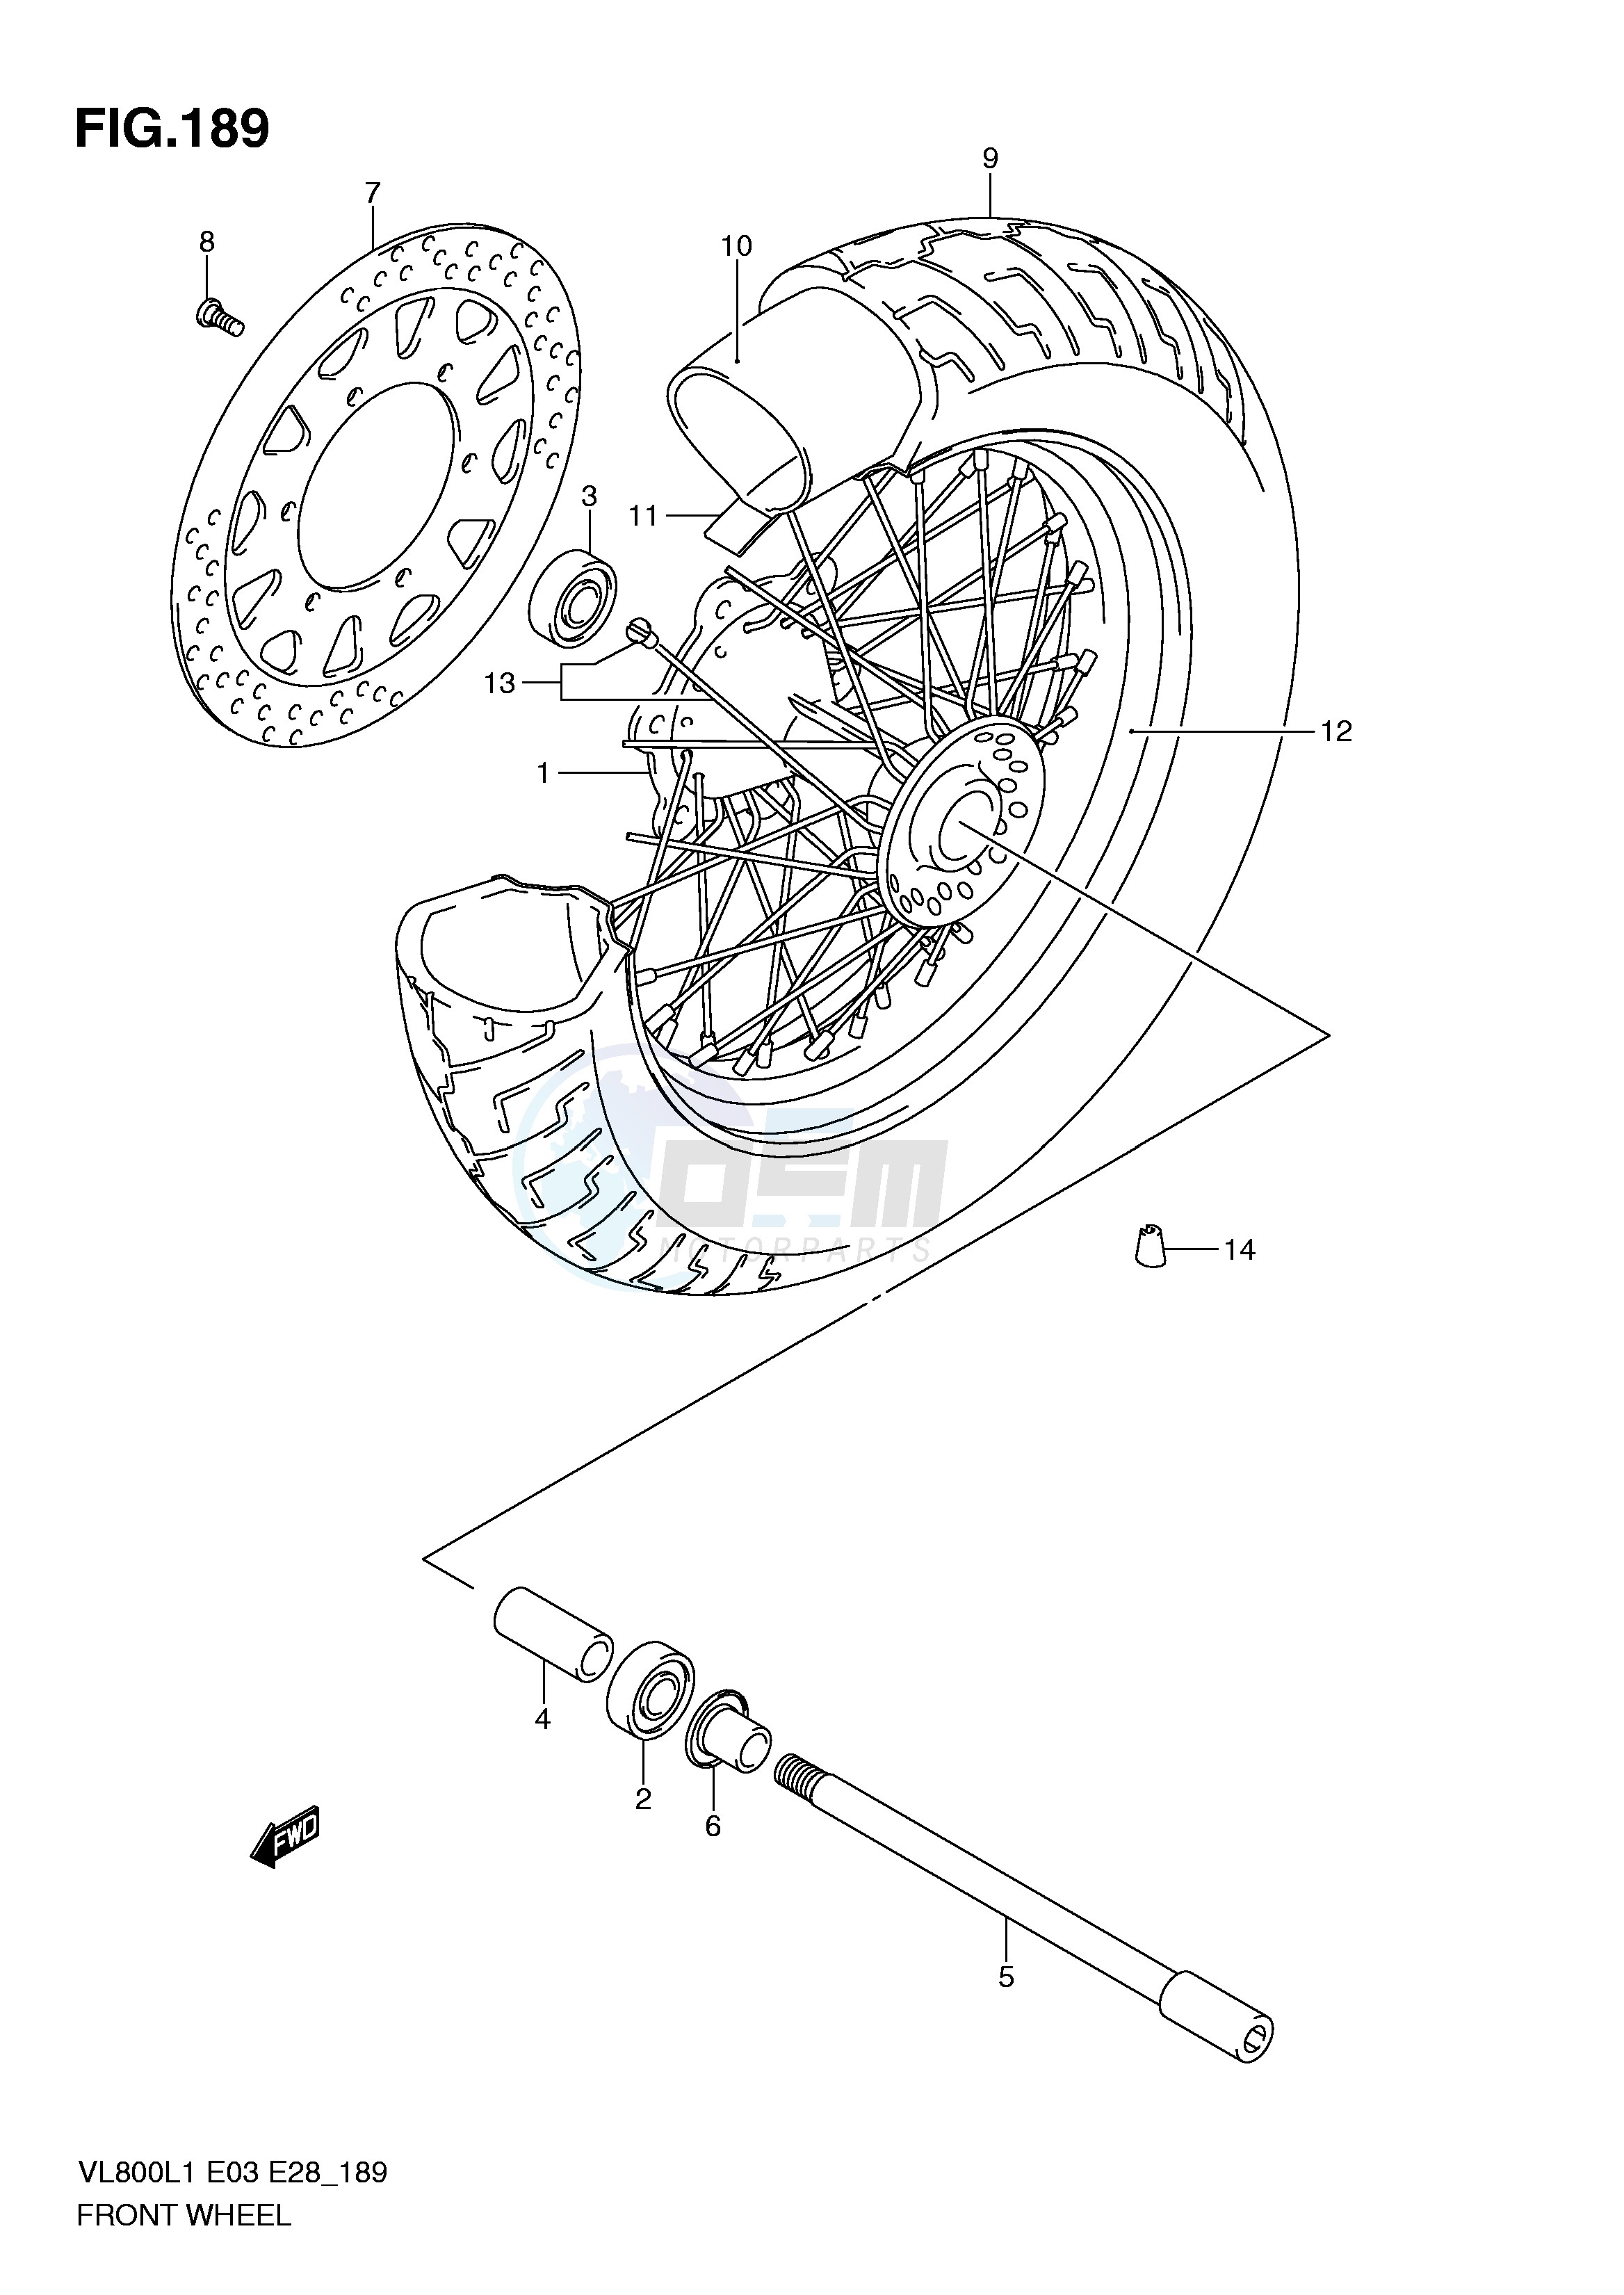 FRONT WHEEL (VL800TL1 E3) blueprint